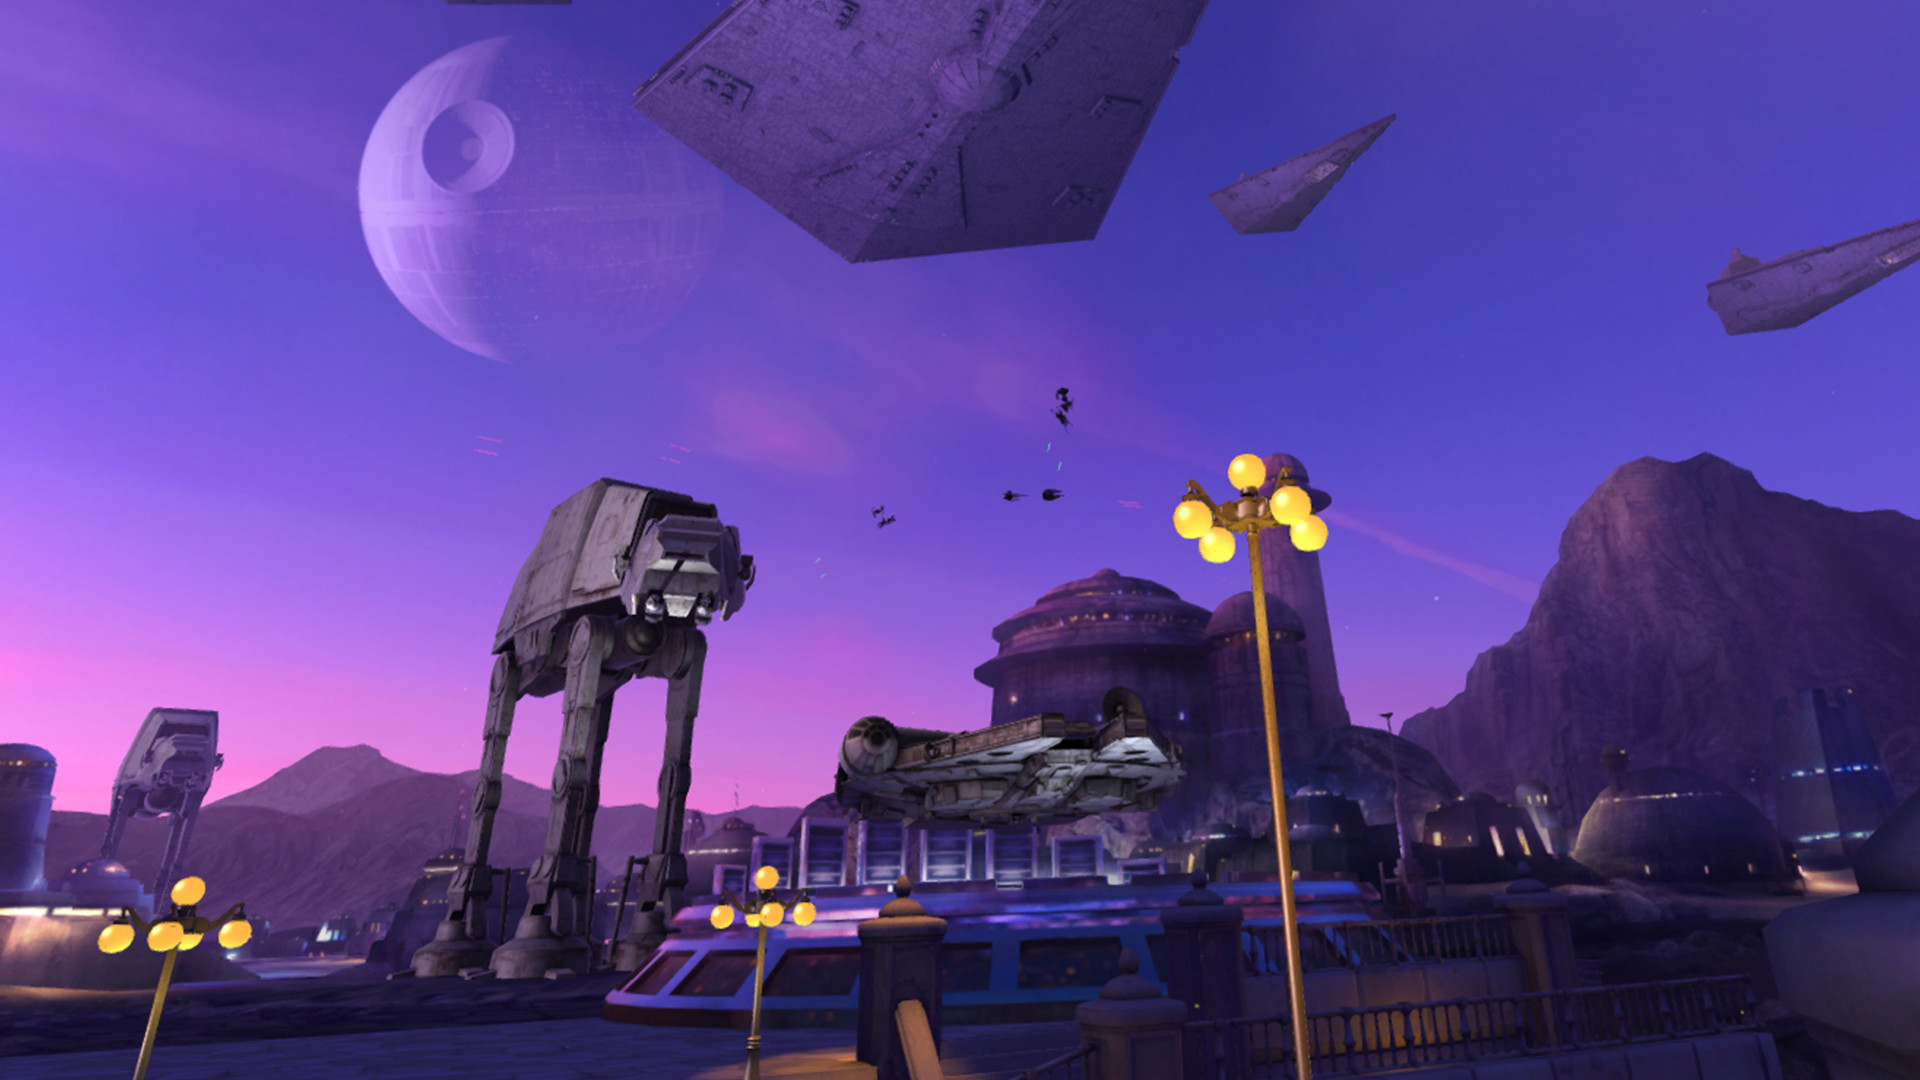 Disney Movies VR screenshot